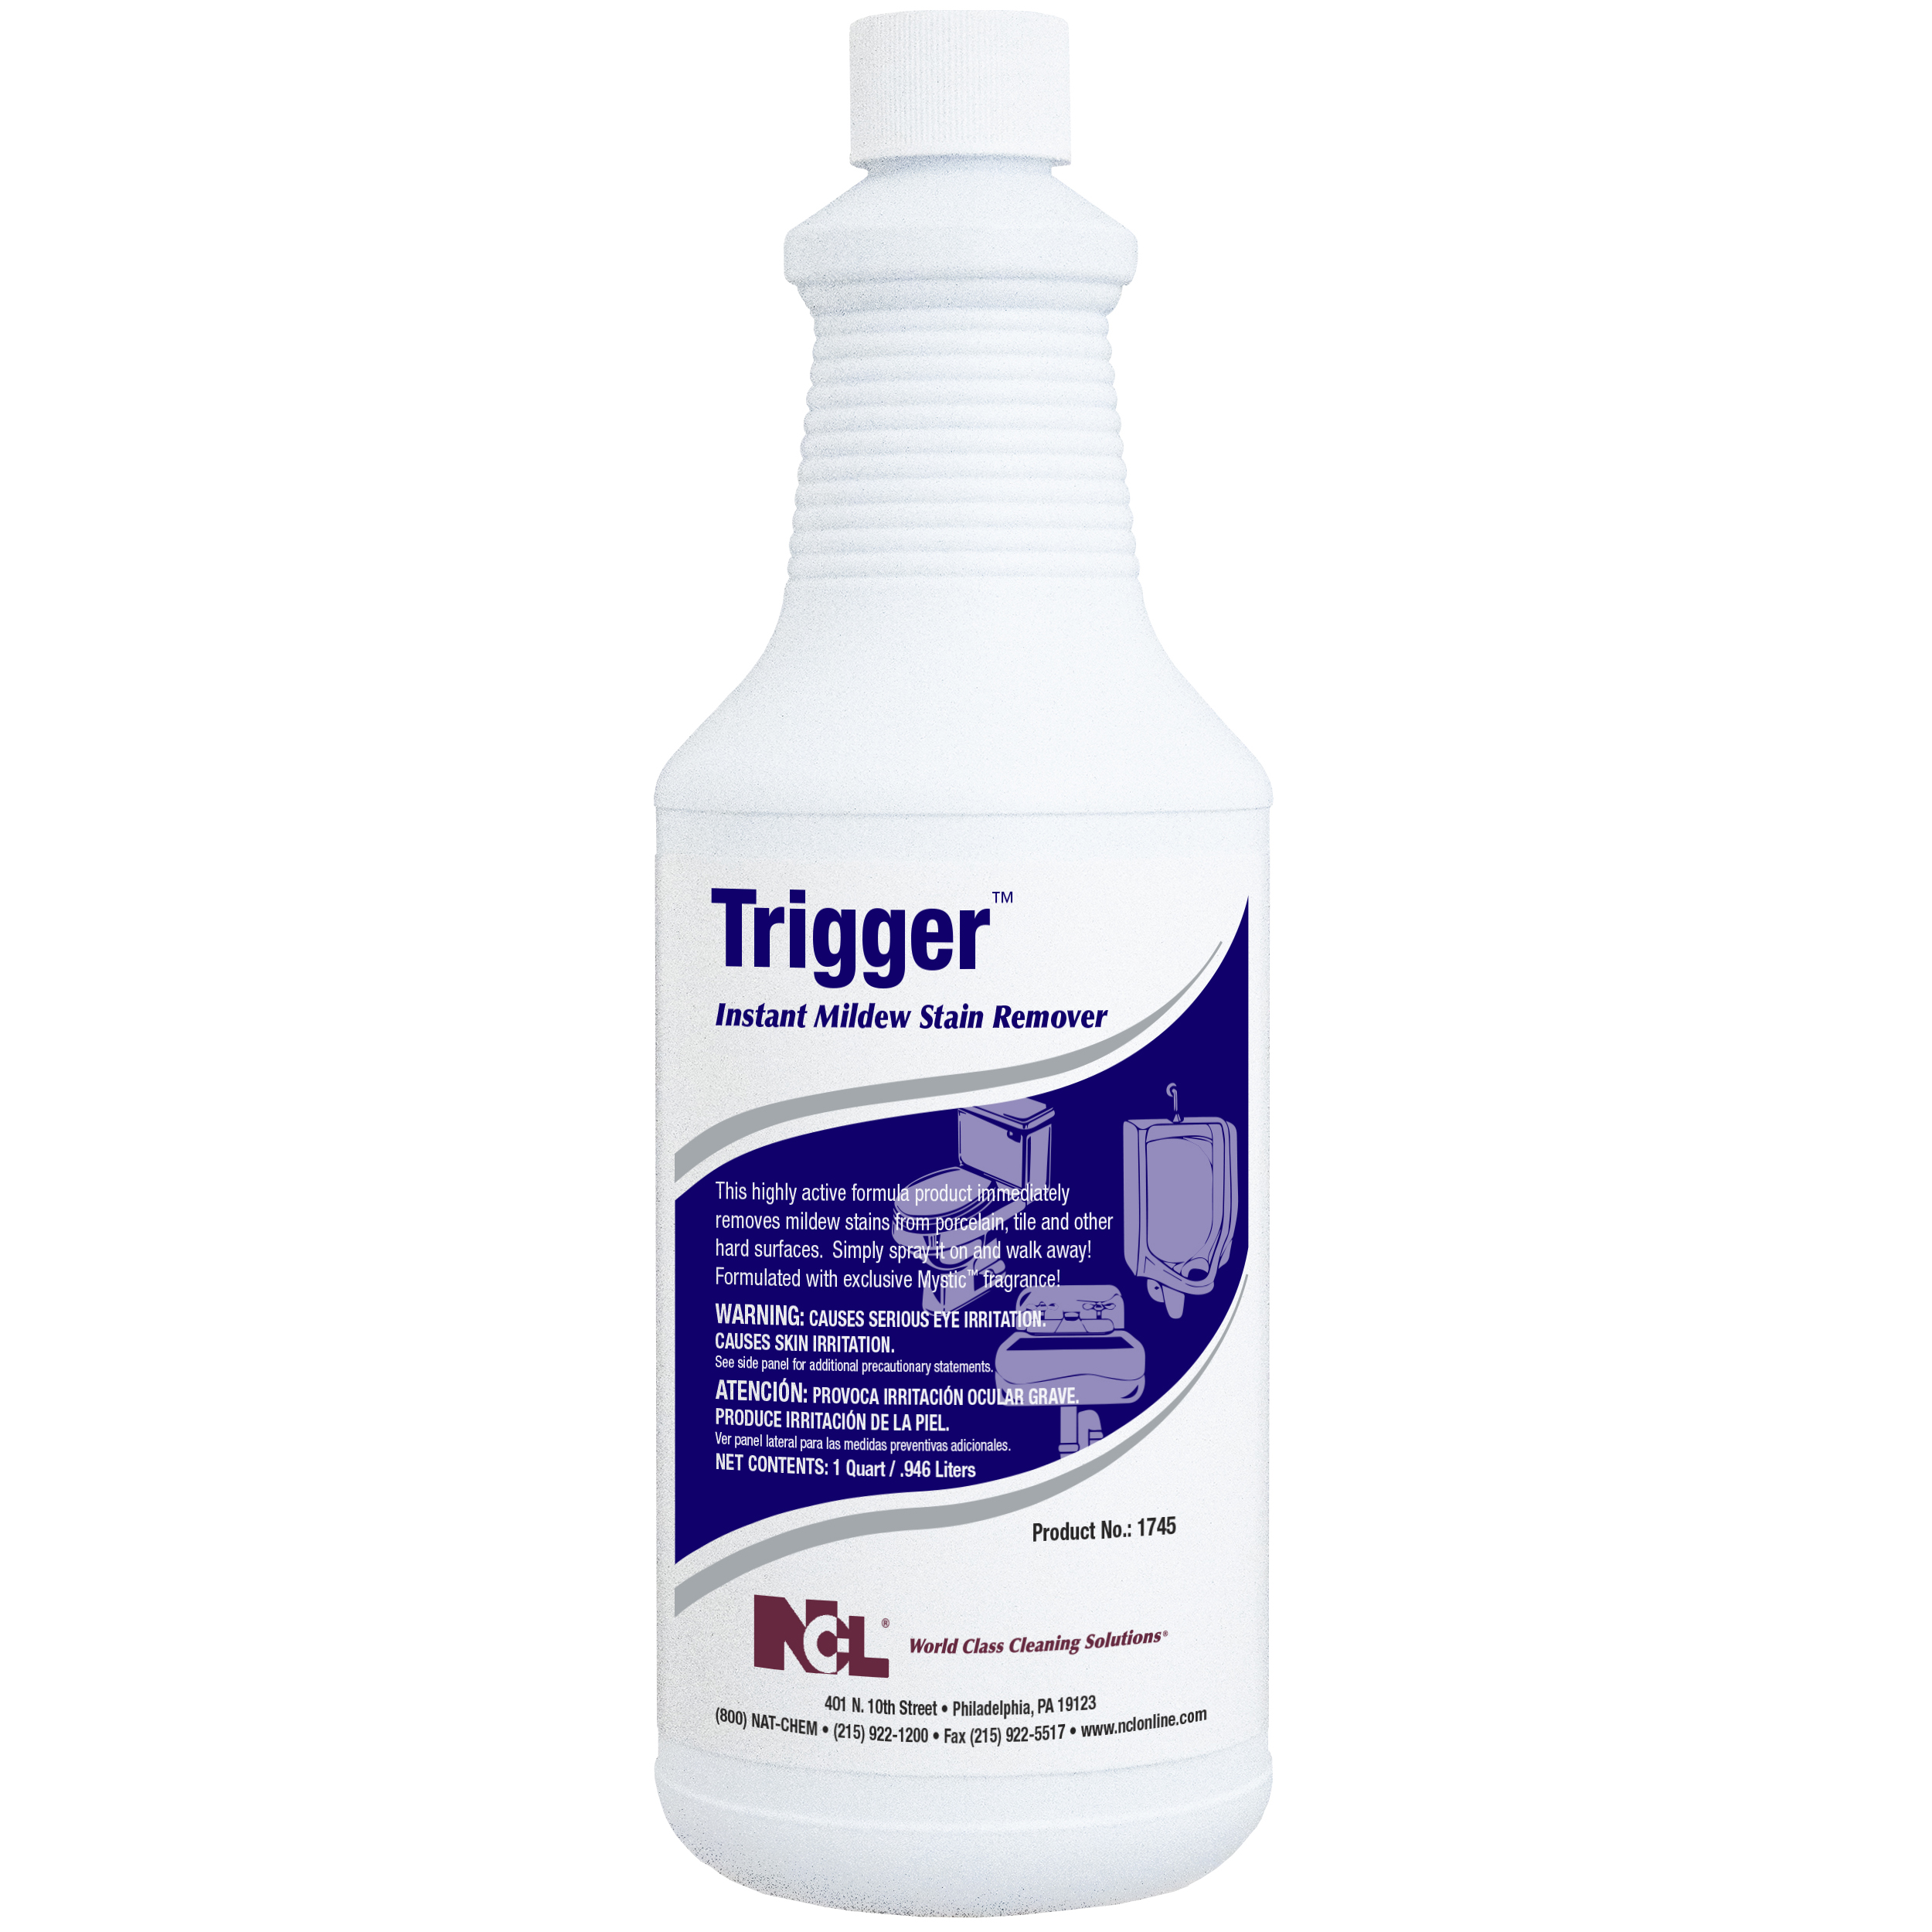  TRIGGER Instant Mildew Stain Remover 12/32 oz (1 Qt.) Case (NCL1745) 